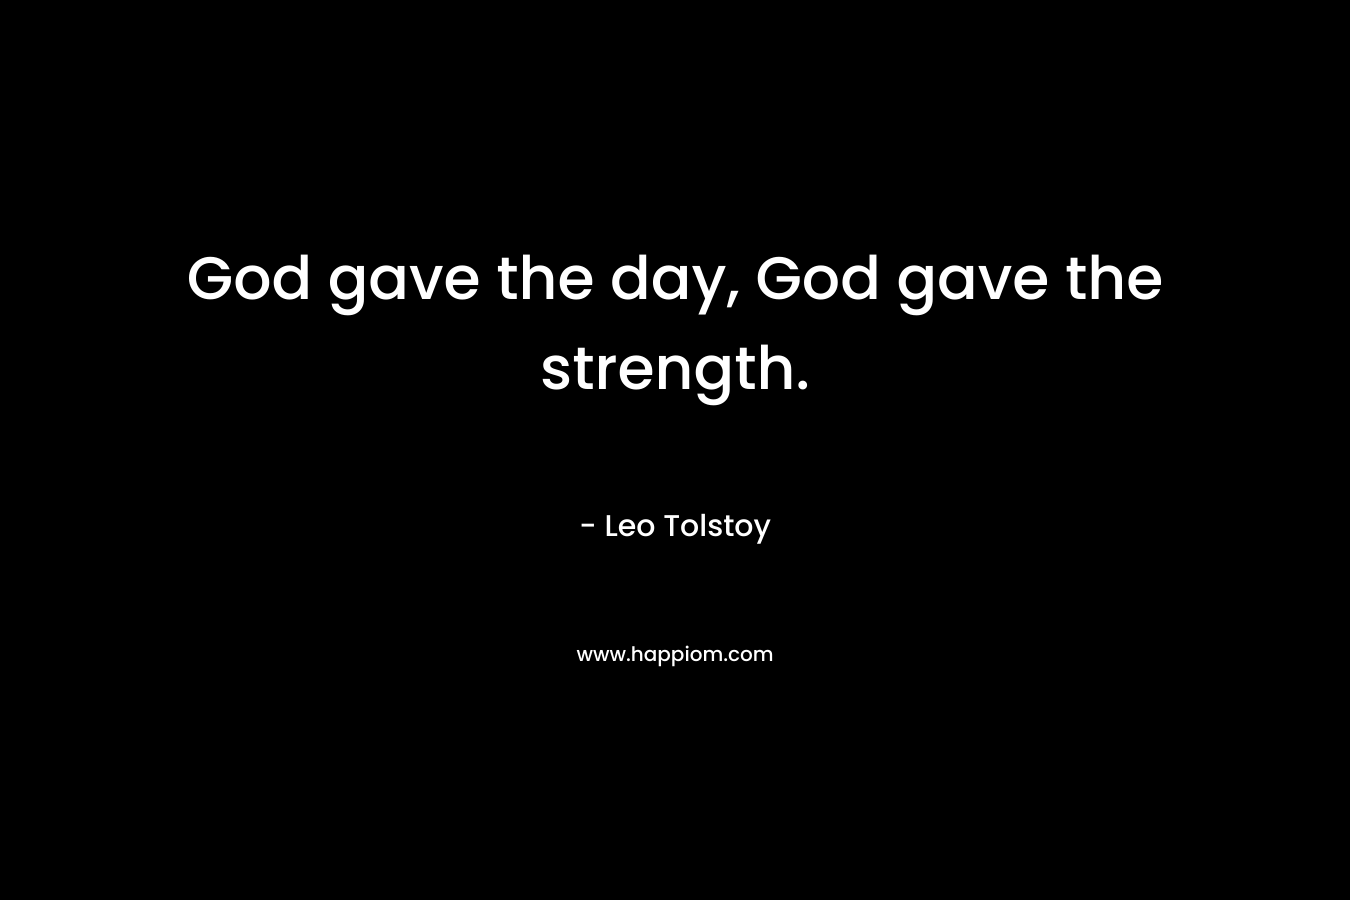 God gave the day, God gave the strength.